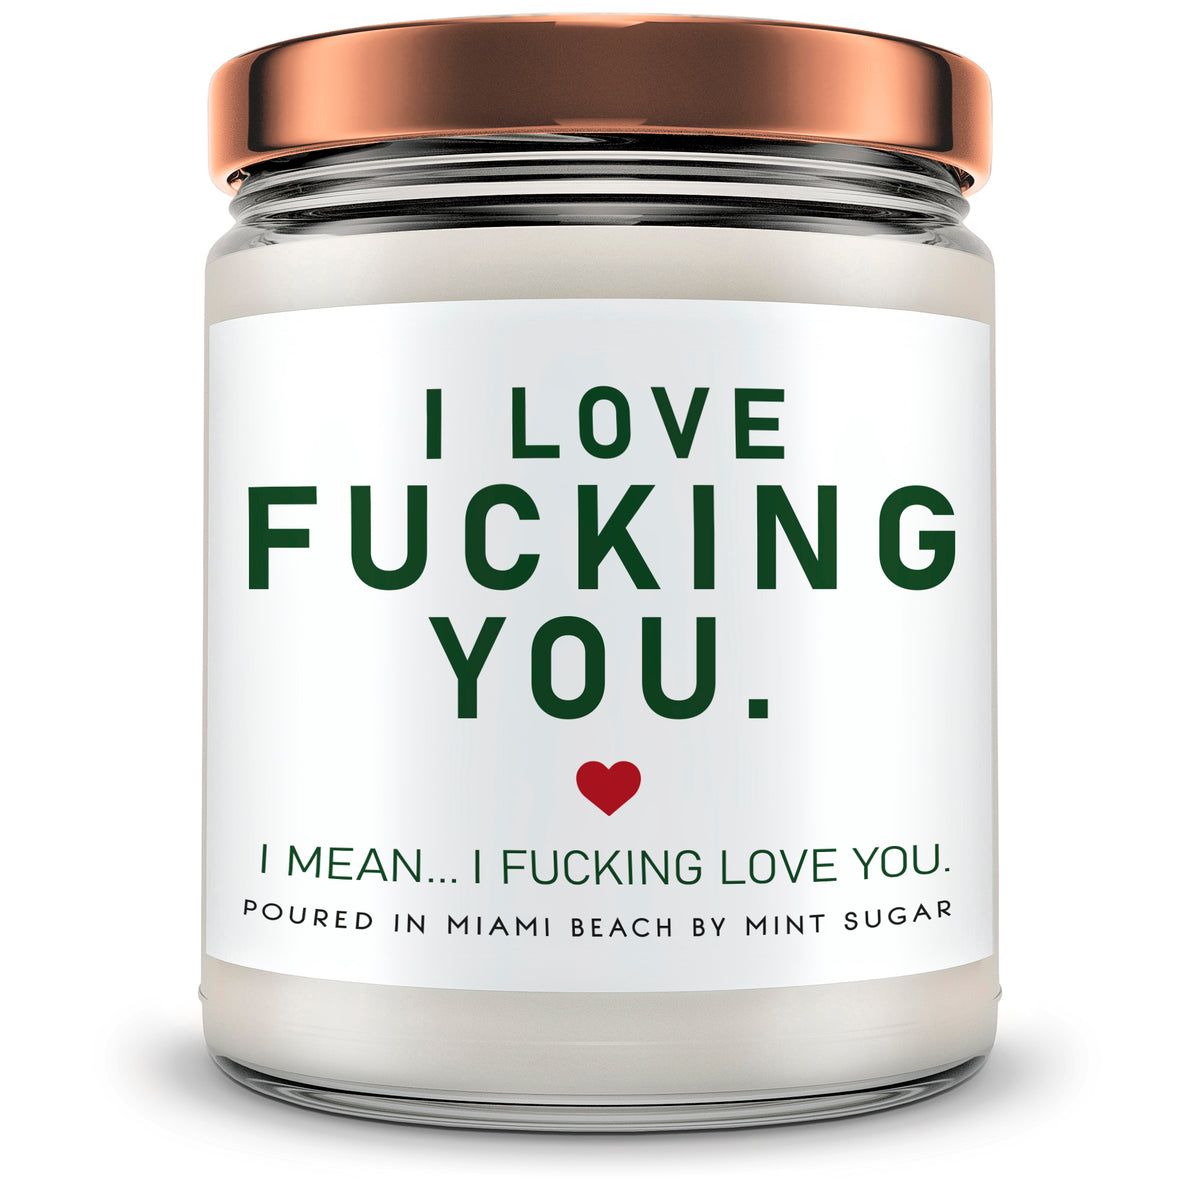 I Love Fucking You. I Mean... I Fucking Love You! - Mint Sugar Candle